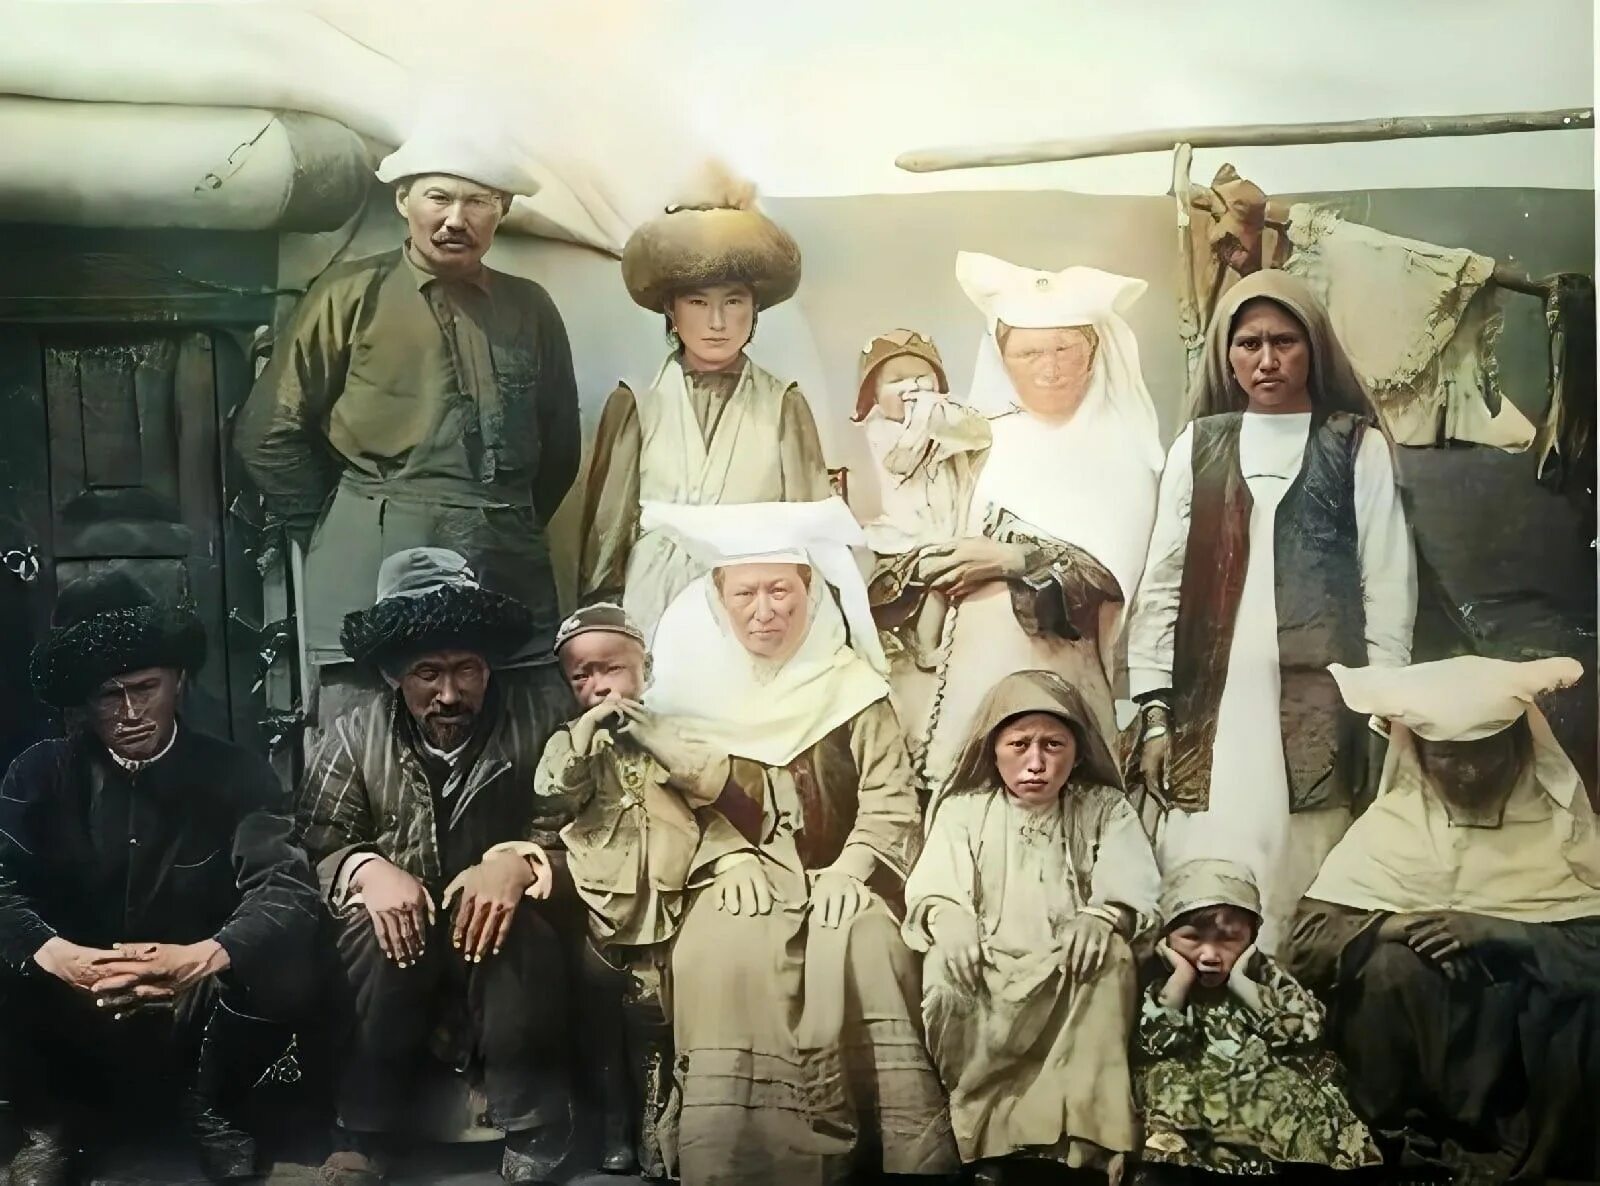 Появление казахов. Казахи 19 века. Киргизский Курултай 19 век. Казахи Тургай XVIII век. Казахи 20 века.